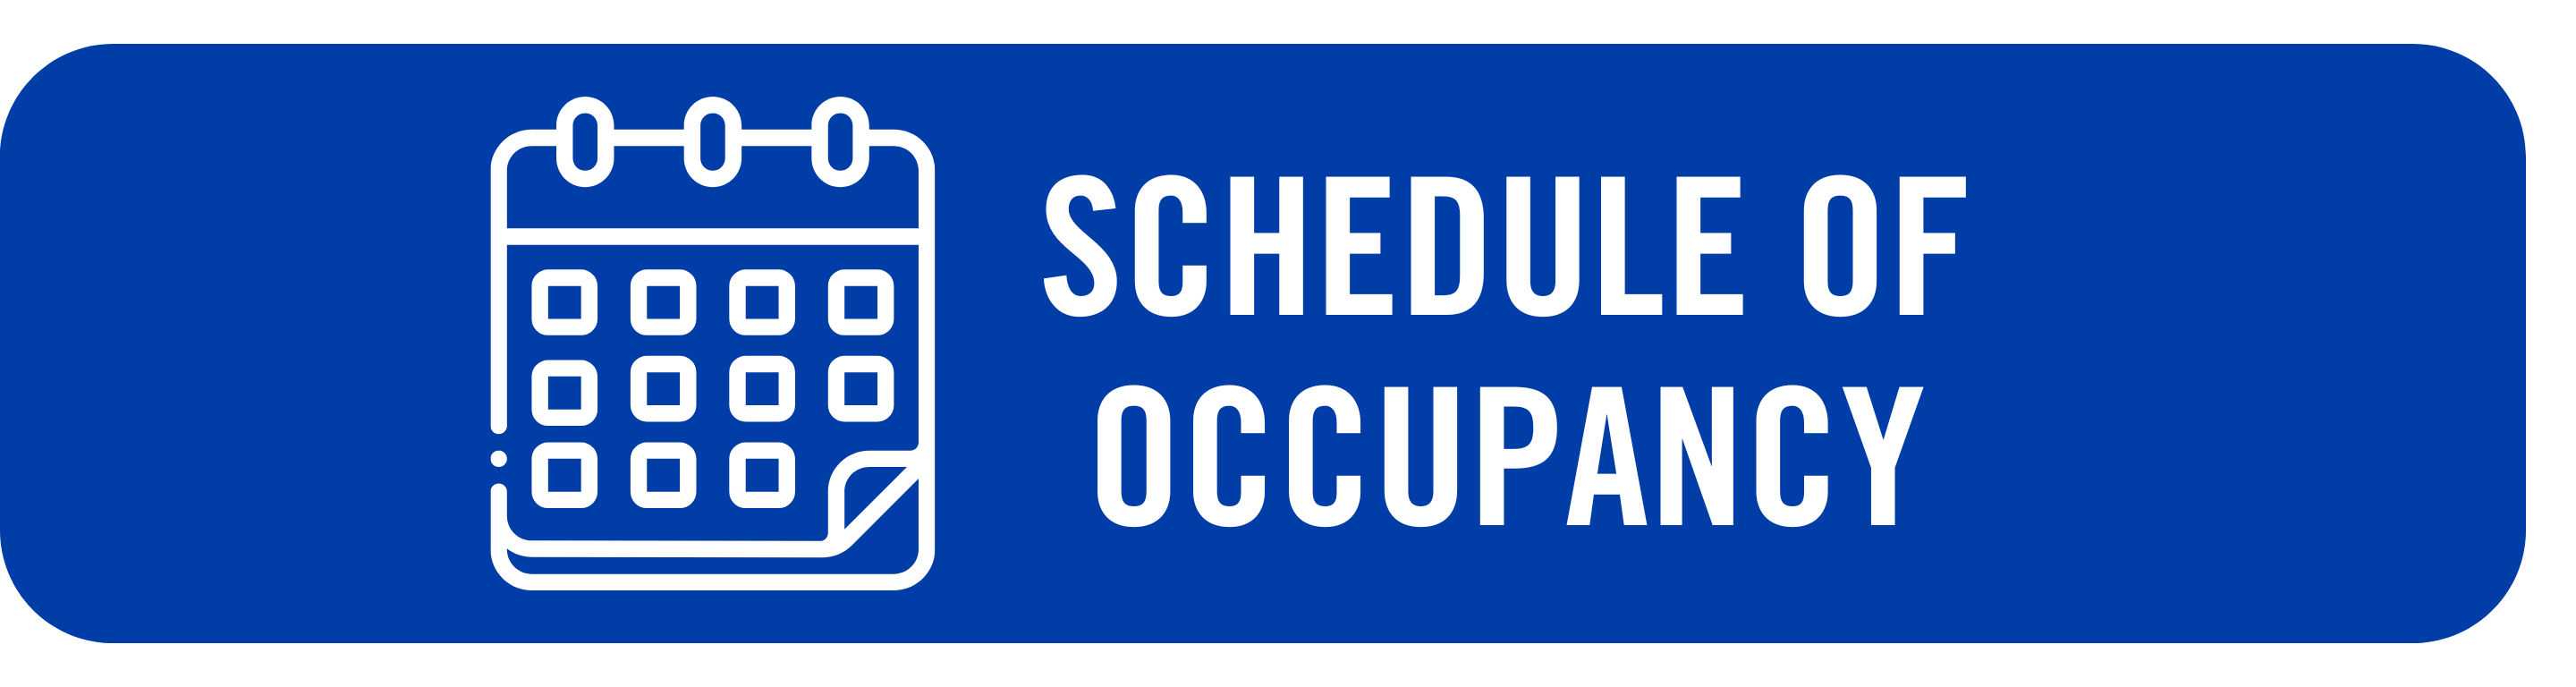 Schedule of Occupancy